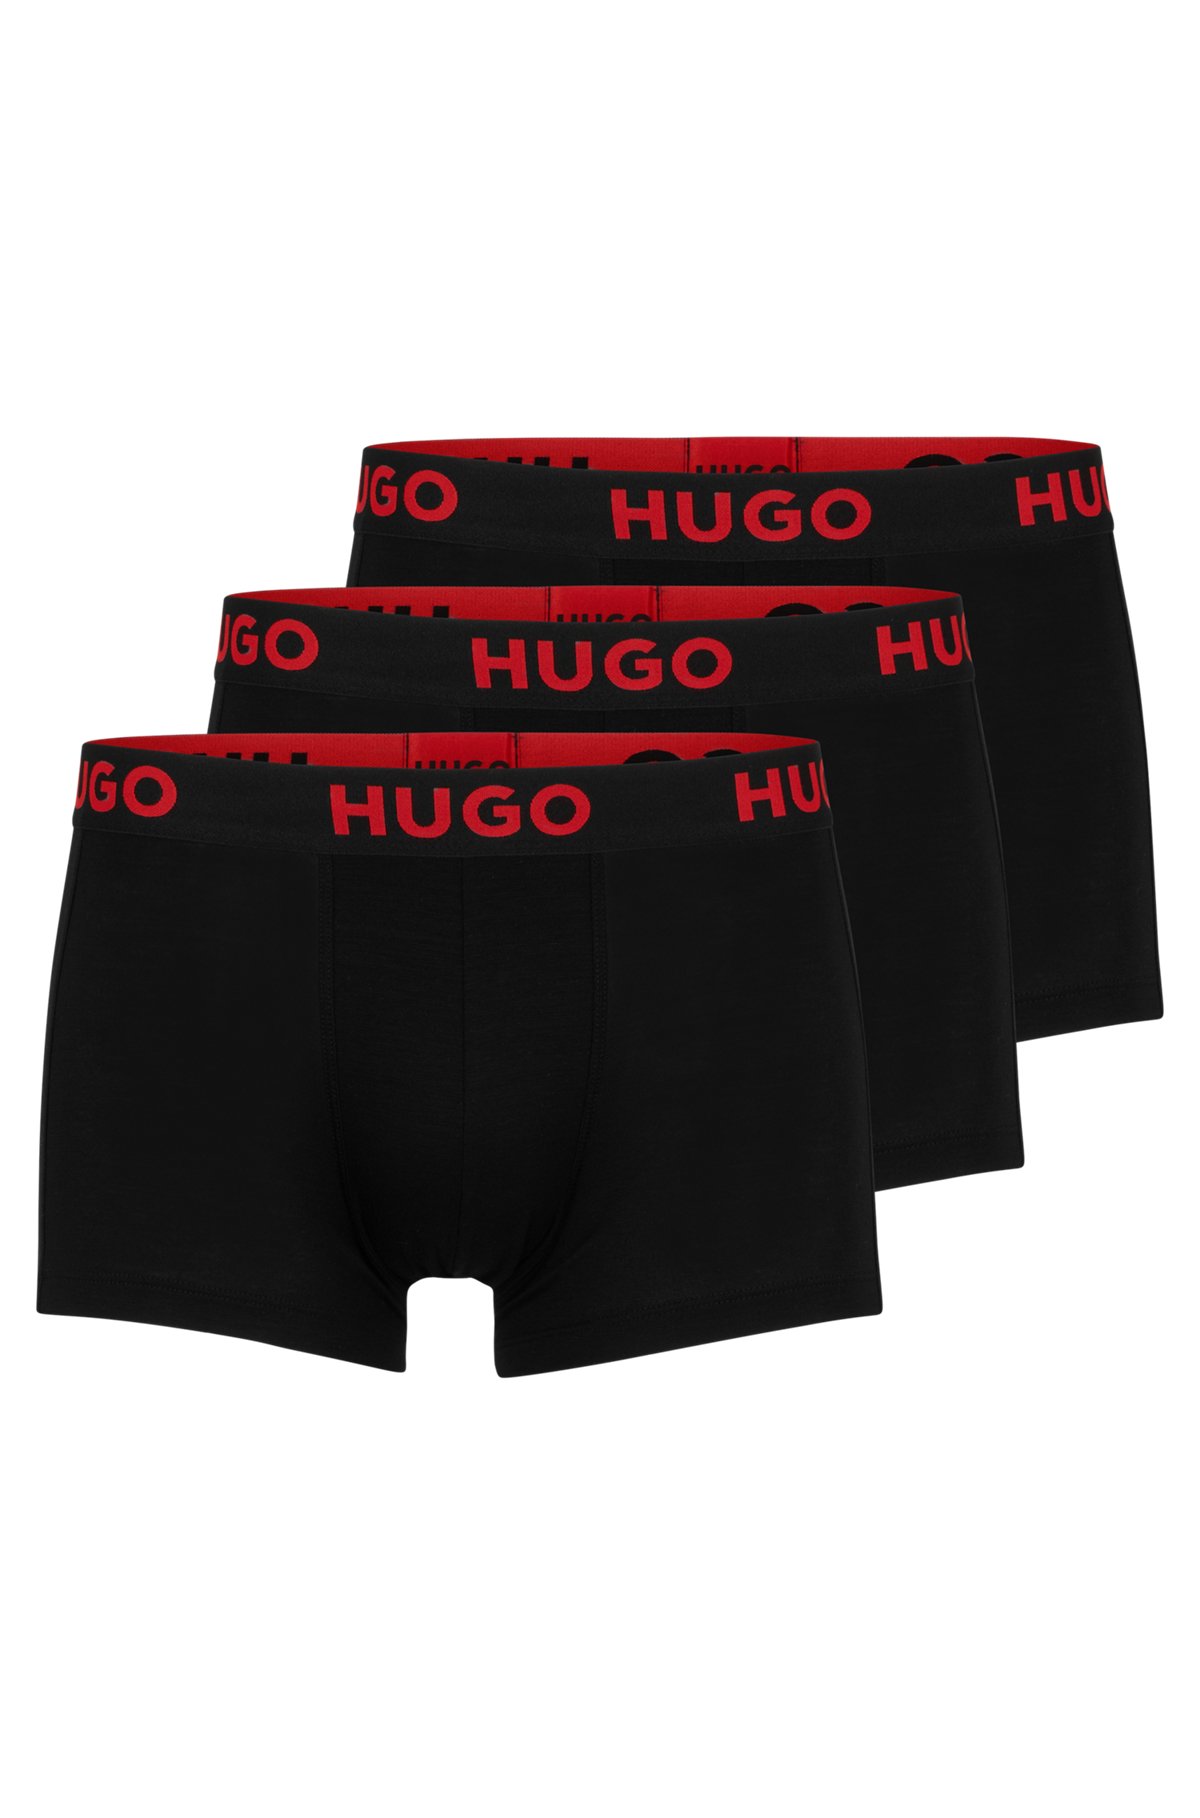 Hugo Boss 3 PACK - pánské boxerky HUGO 50496723-001 XL